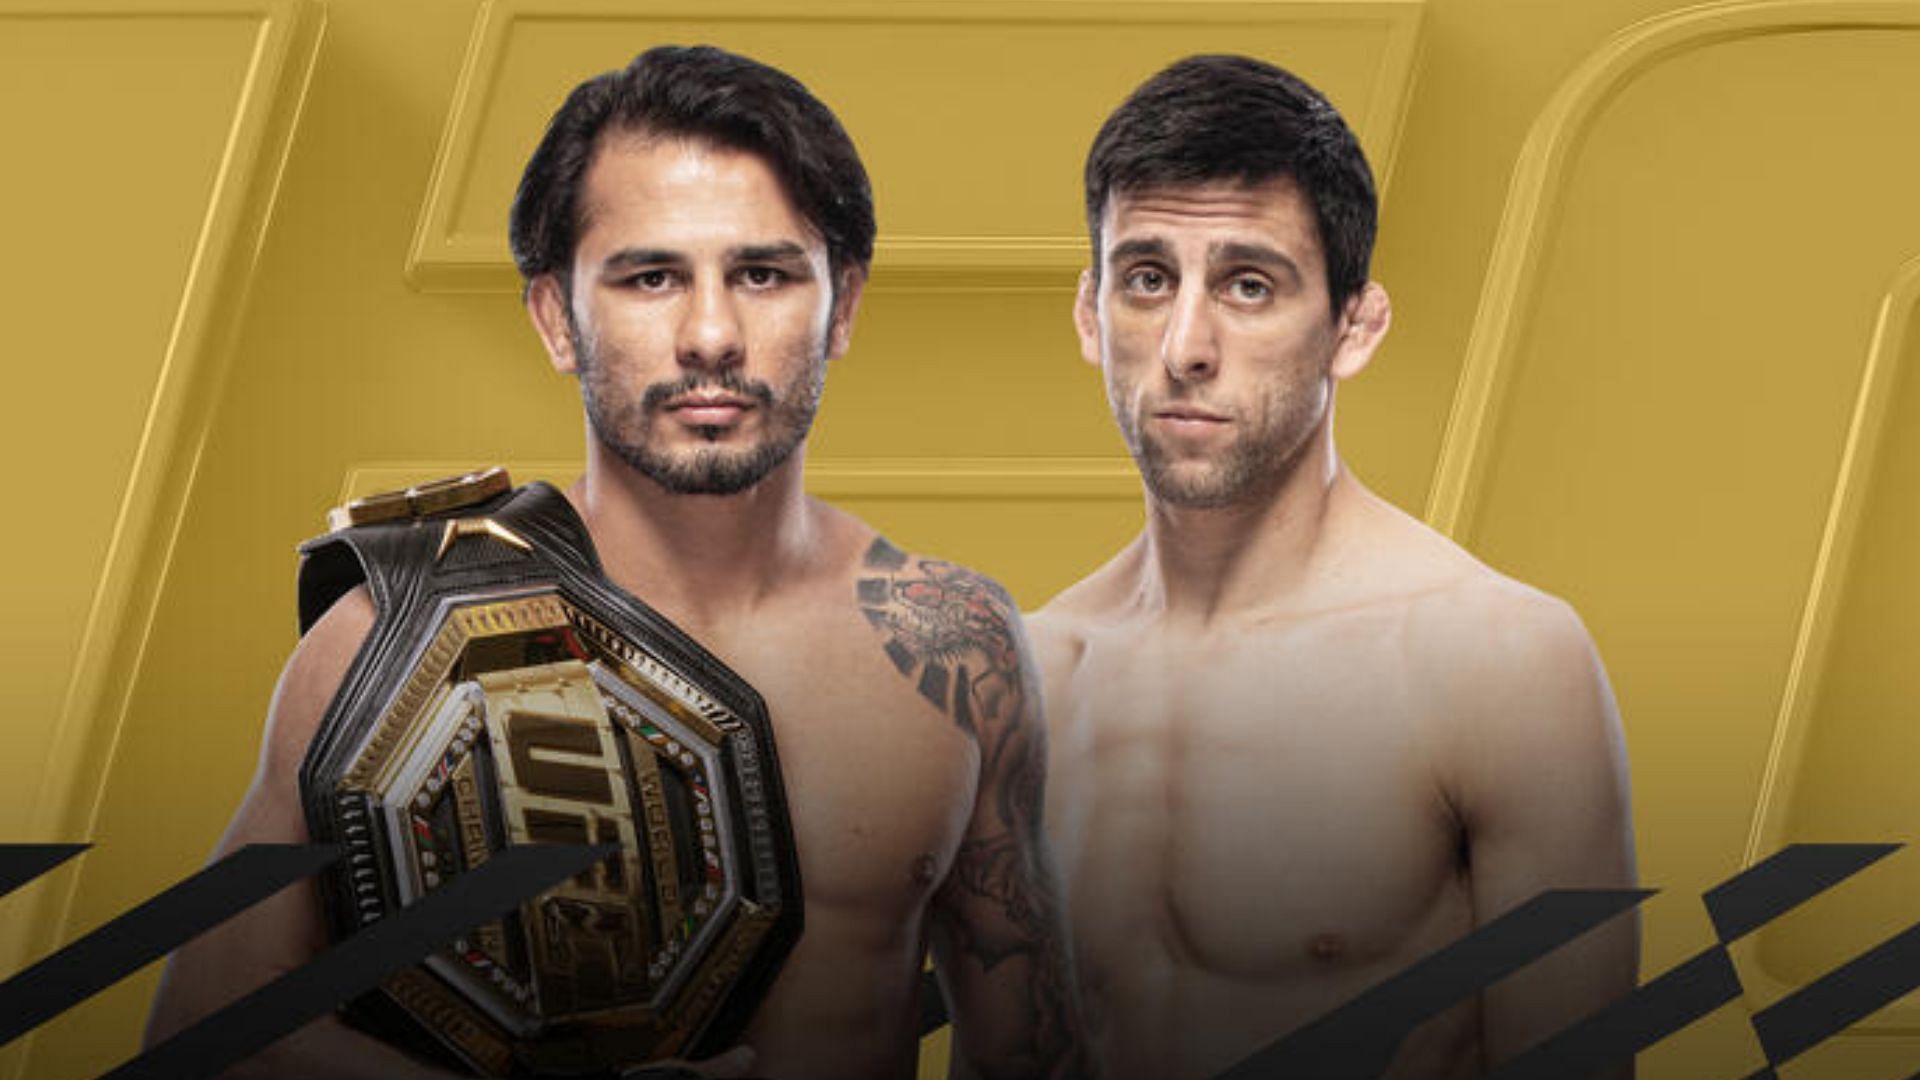 UFC 301: Alexandre Pantoja vs. Steve Erceg odds: Who are the betting favorites on the upcoming PPV? [Image courtesy of @ufc_brasil on Instagram]